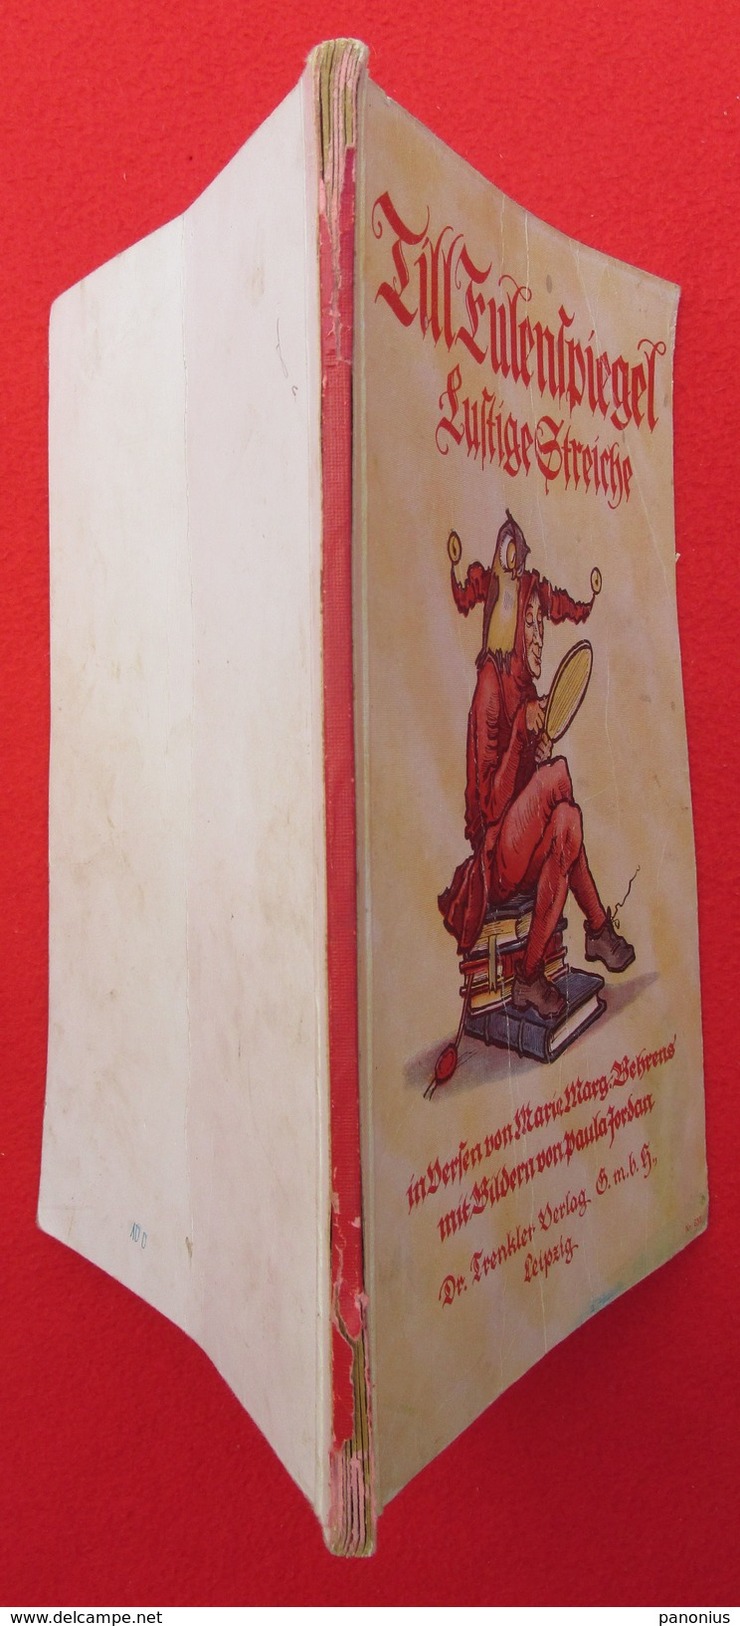 TILL EULENSPIEGEL - Picture Book / Bilderbuch, Edition: Trenkler, Leipzig, Germany, Cca 1930. - Picture Book